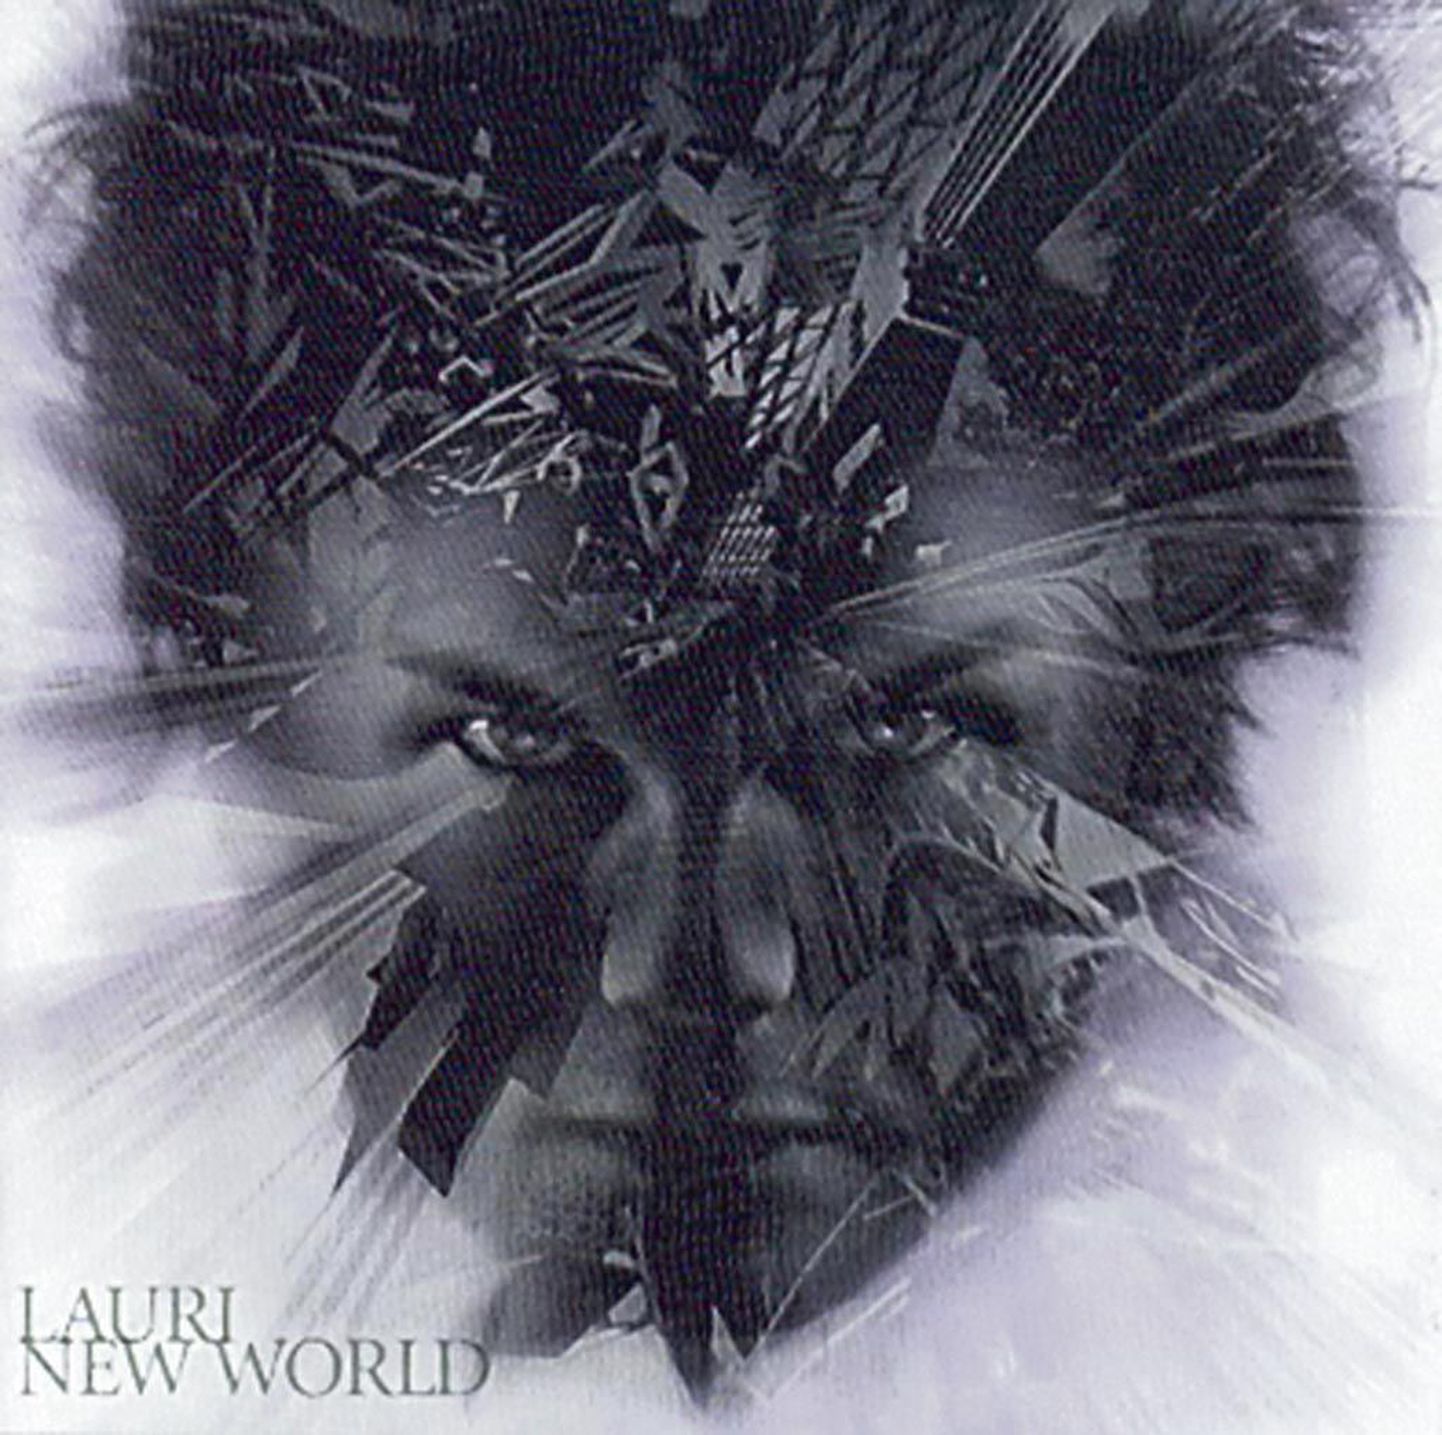 Lauri "New World".